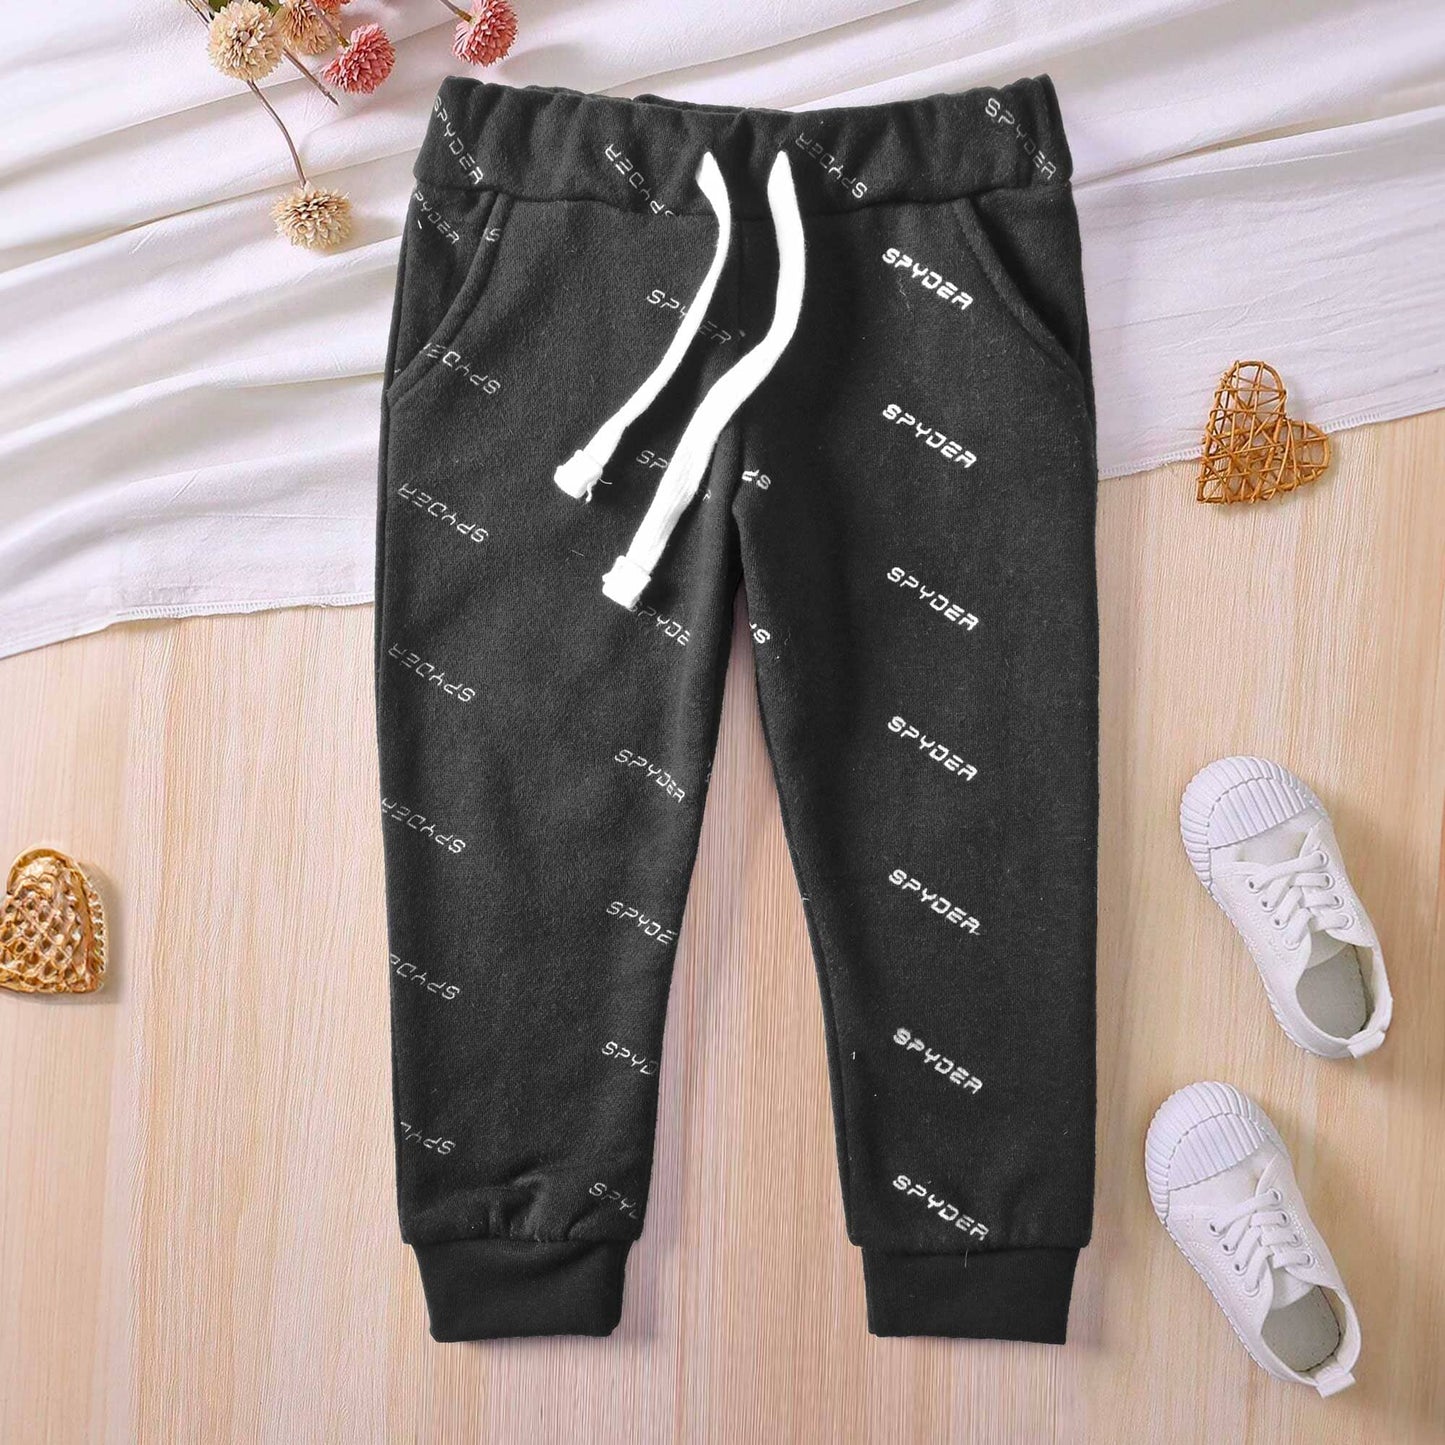 C&A Kid's Spyder Printed Fleece Jogger Pants Boy's Trousers SNR Black 6-9 Months 